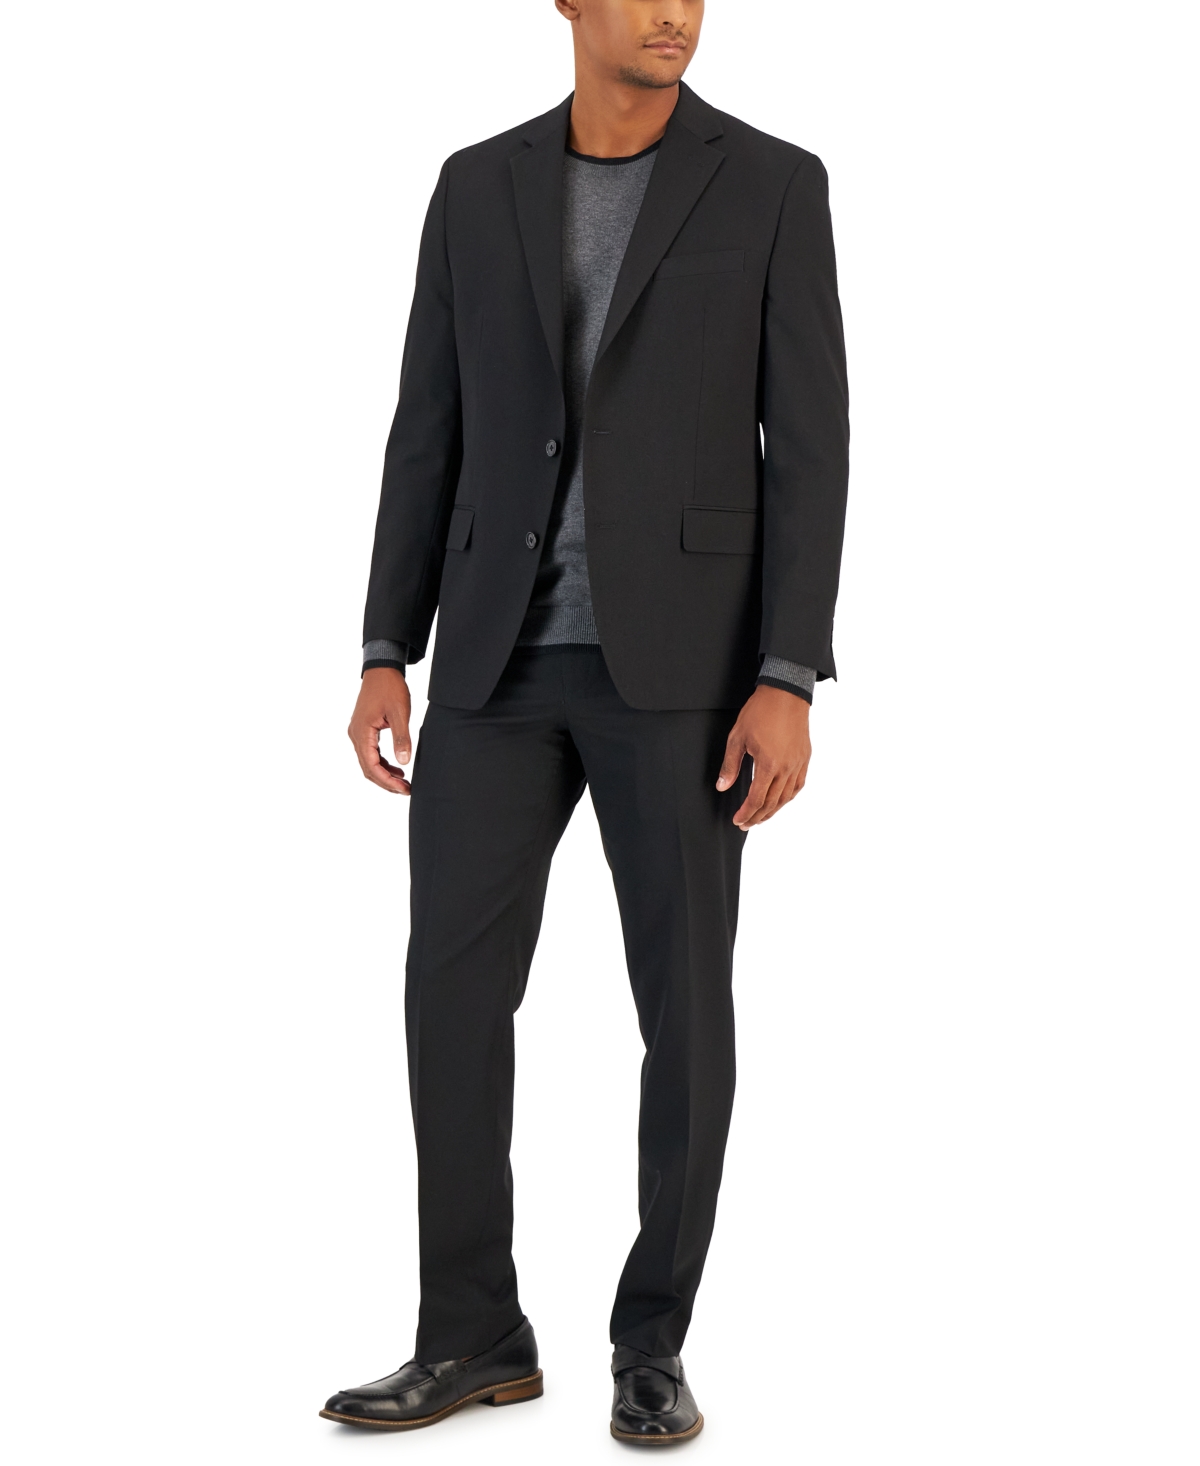 Men's Flex Plain Slim Fit Suits - Medium Charcoal Grey